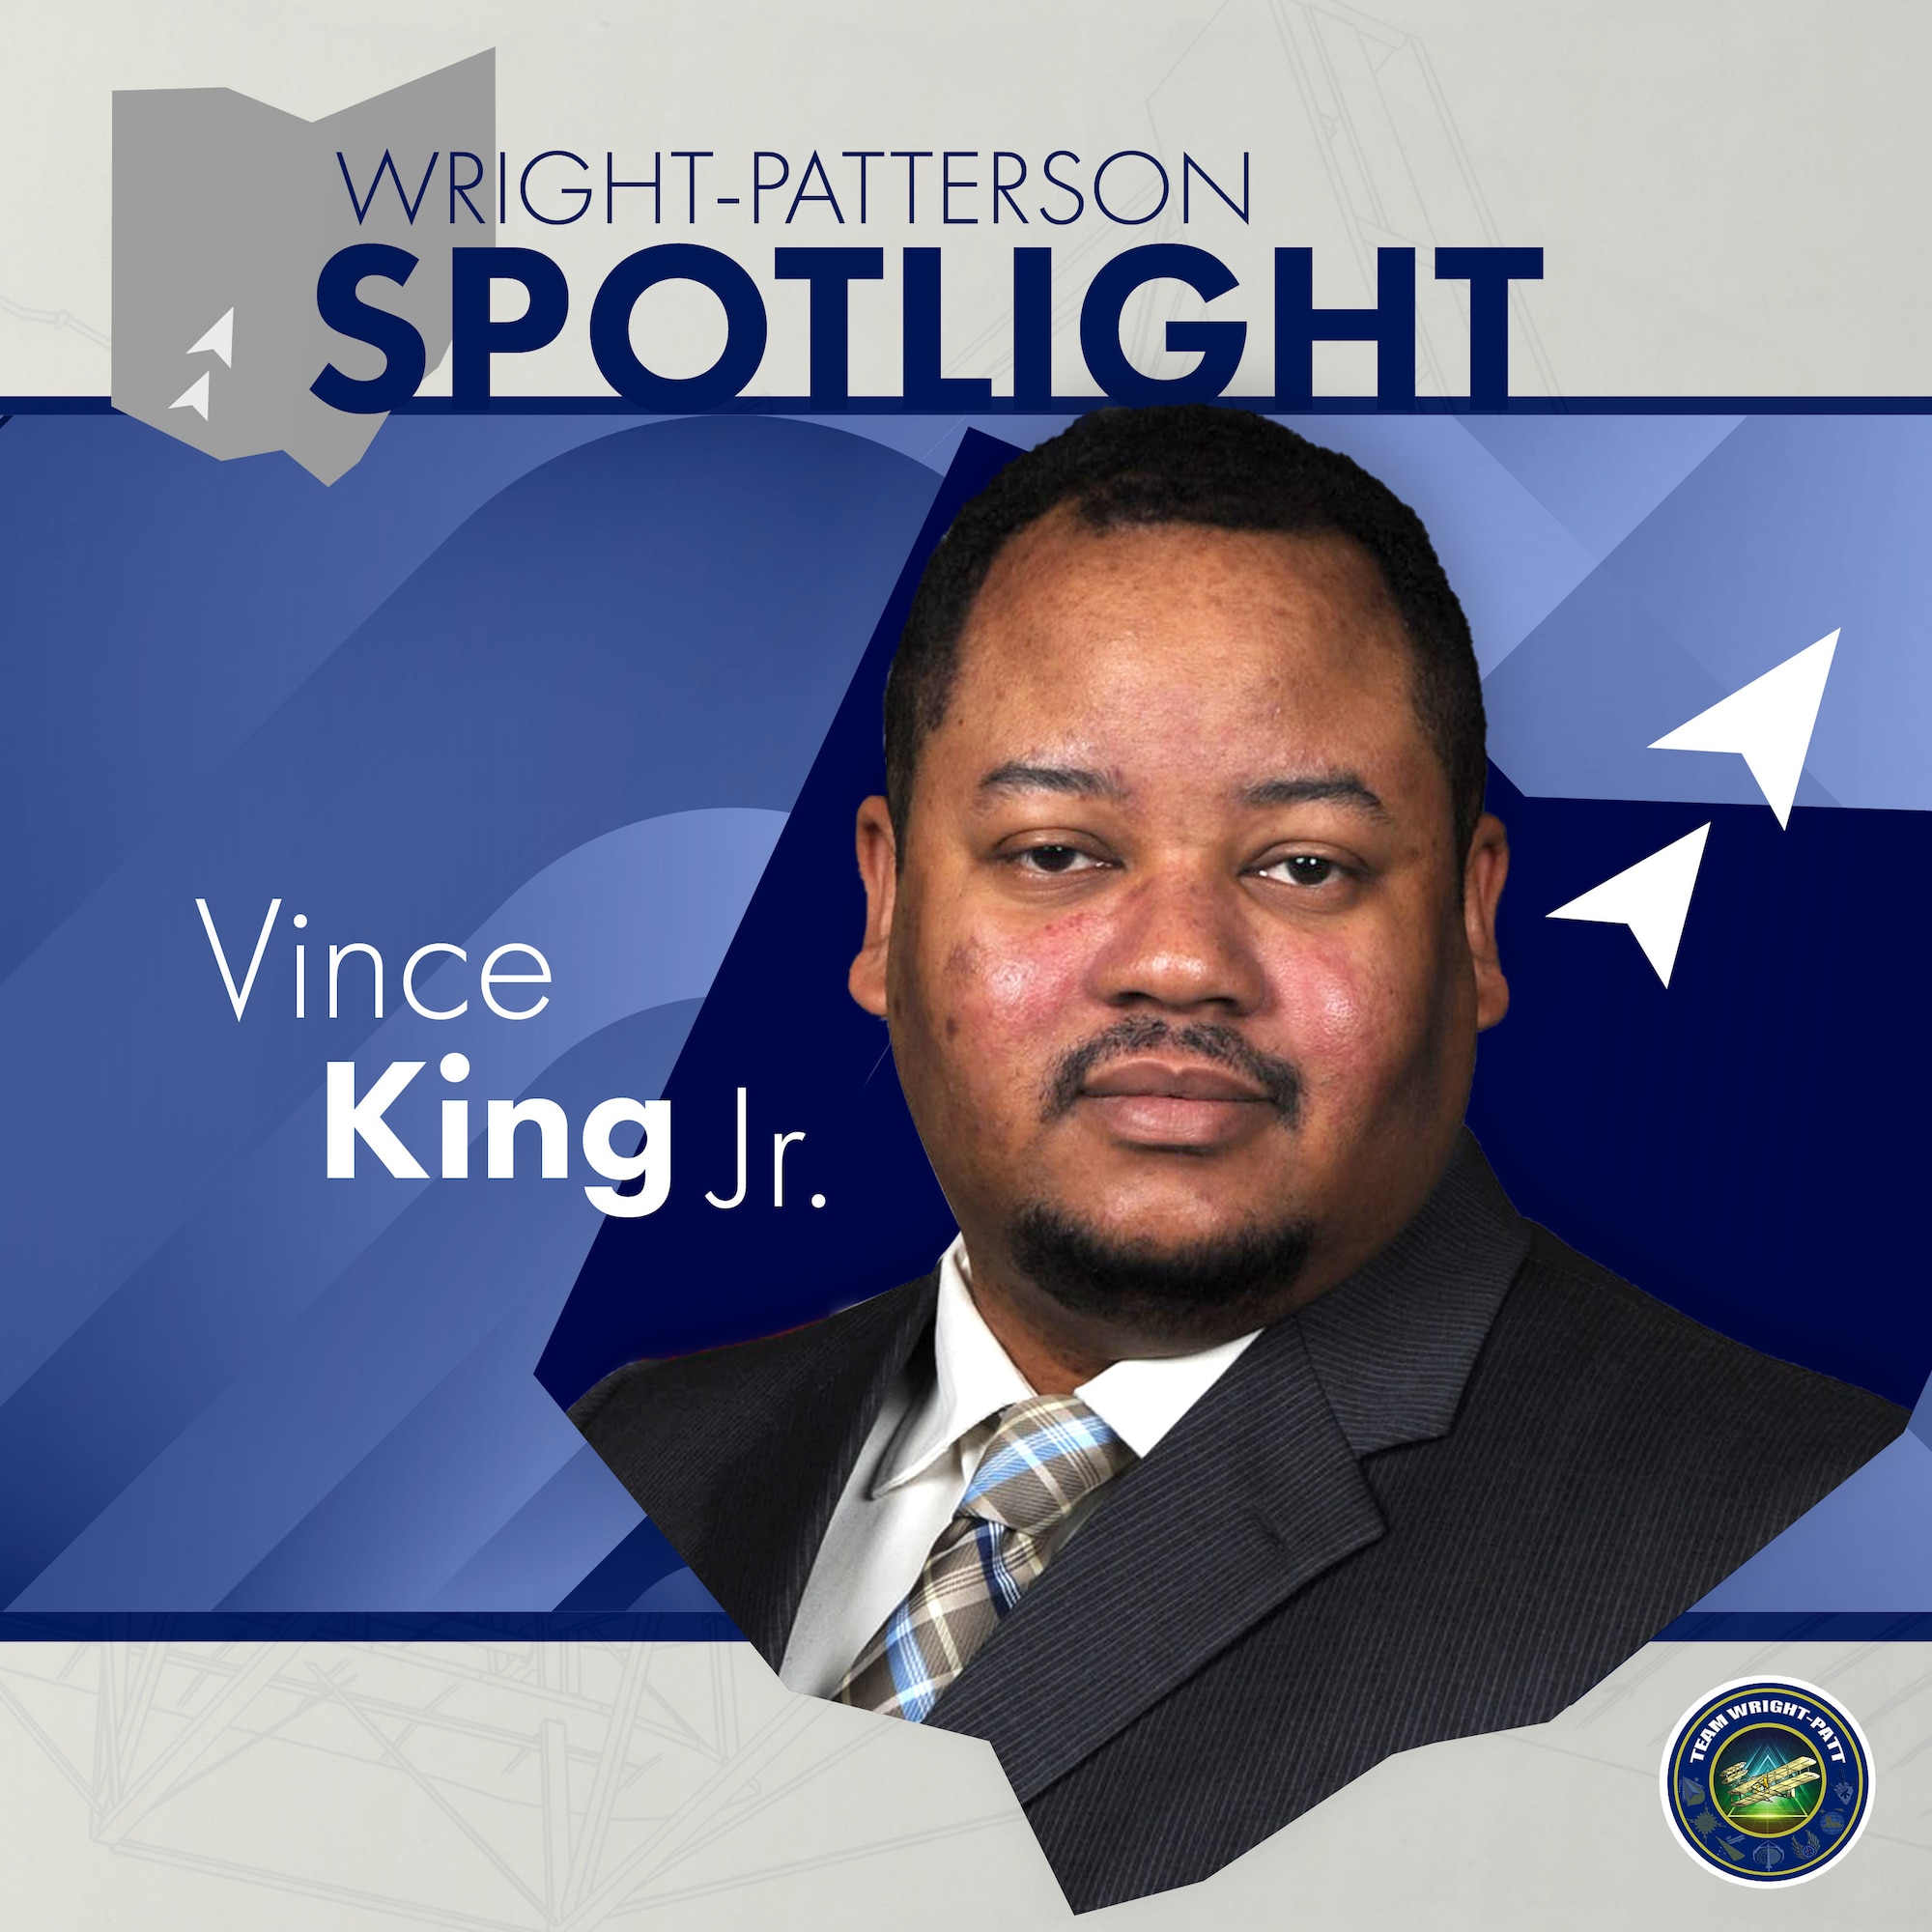 Wright-Patterson Spotlight: Vince King Jr.